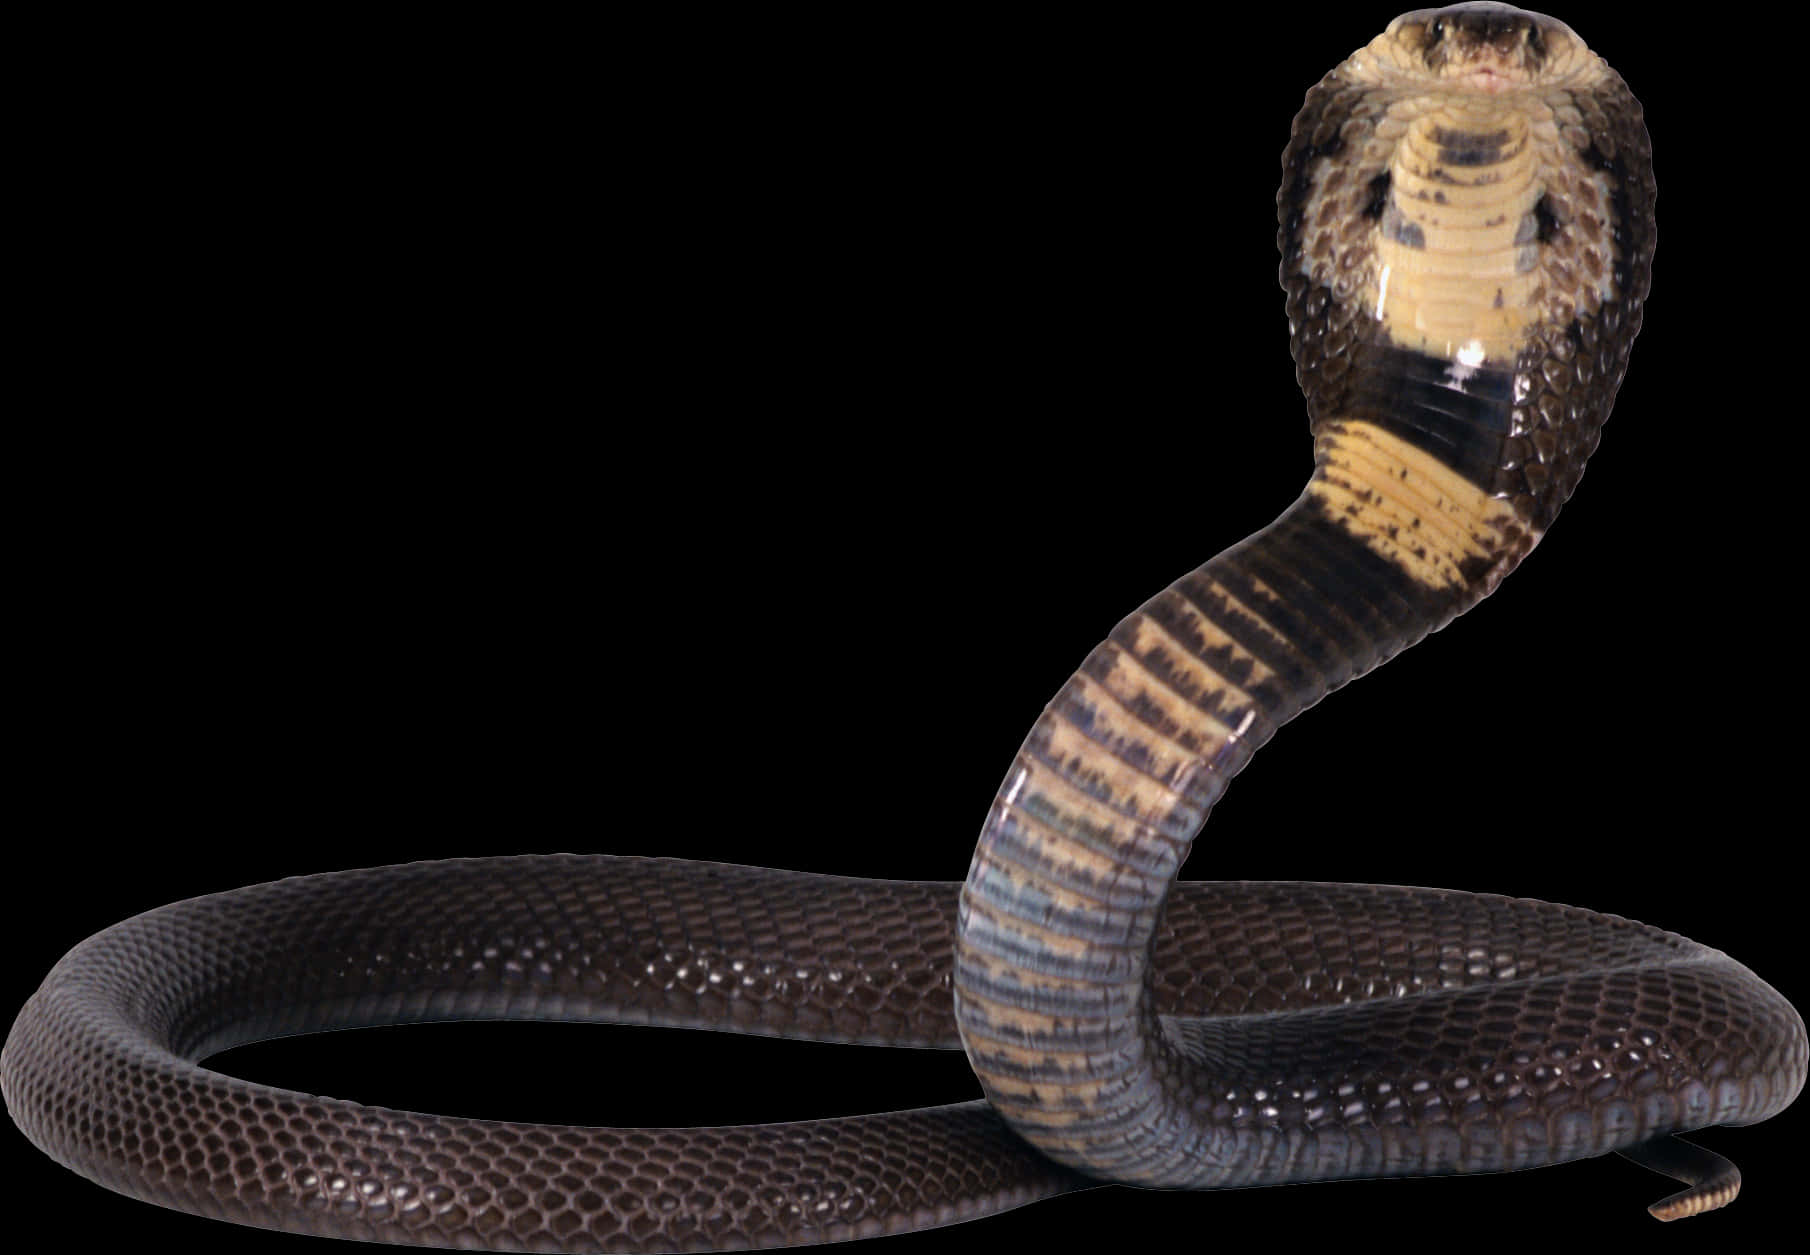 Cobra Snake Defensive Pose